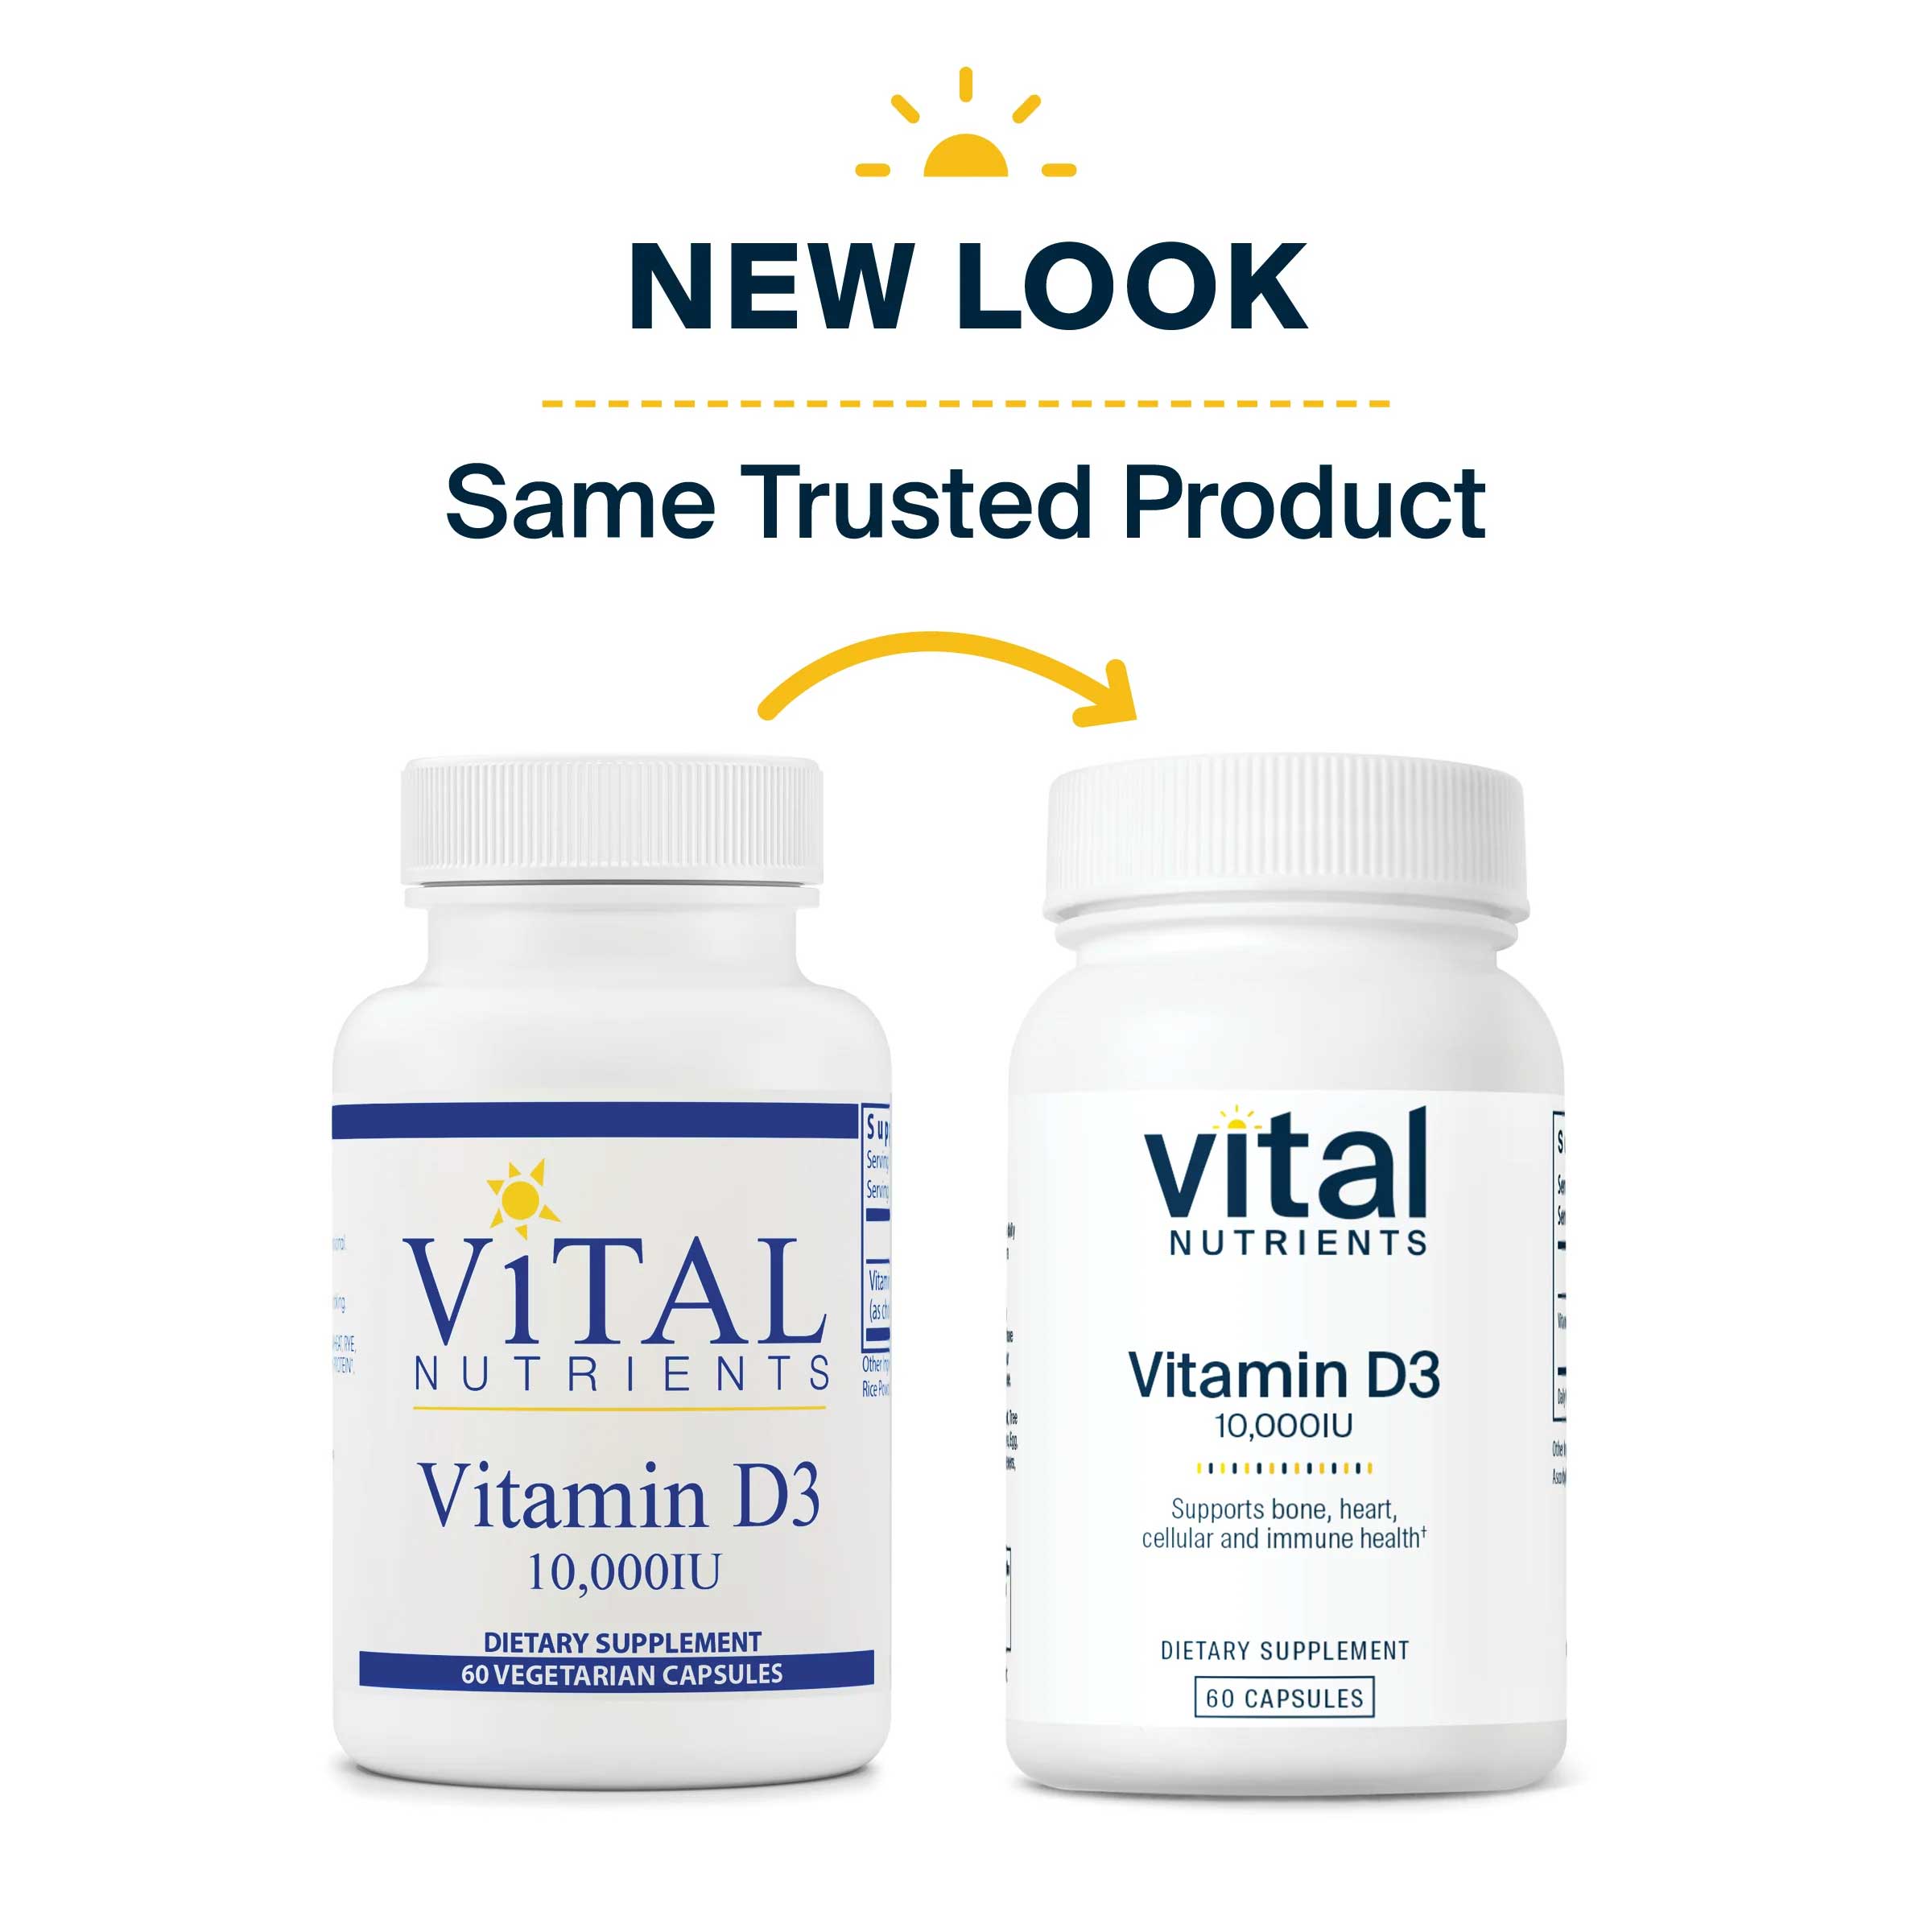 Vital Nutrients Vitamin D3 10,000IU New Look